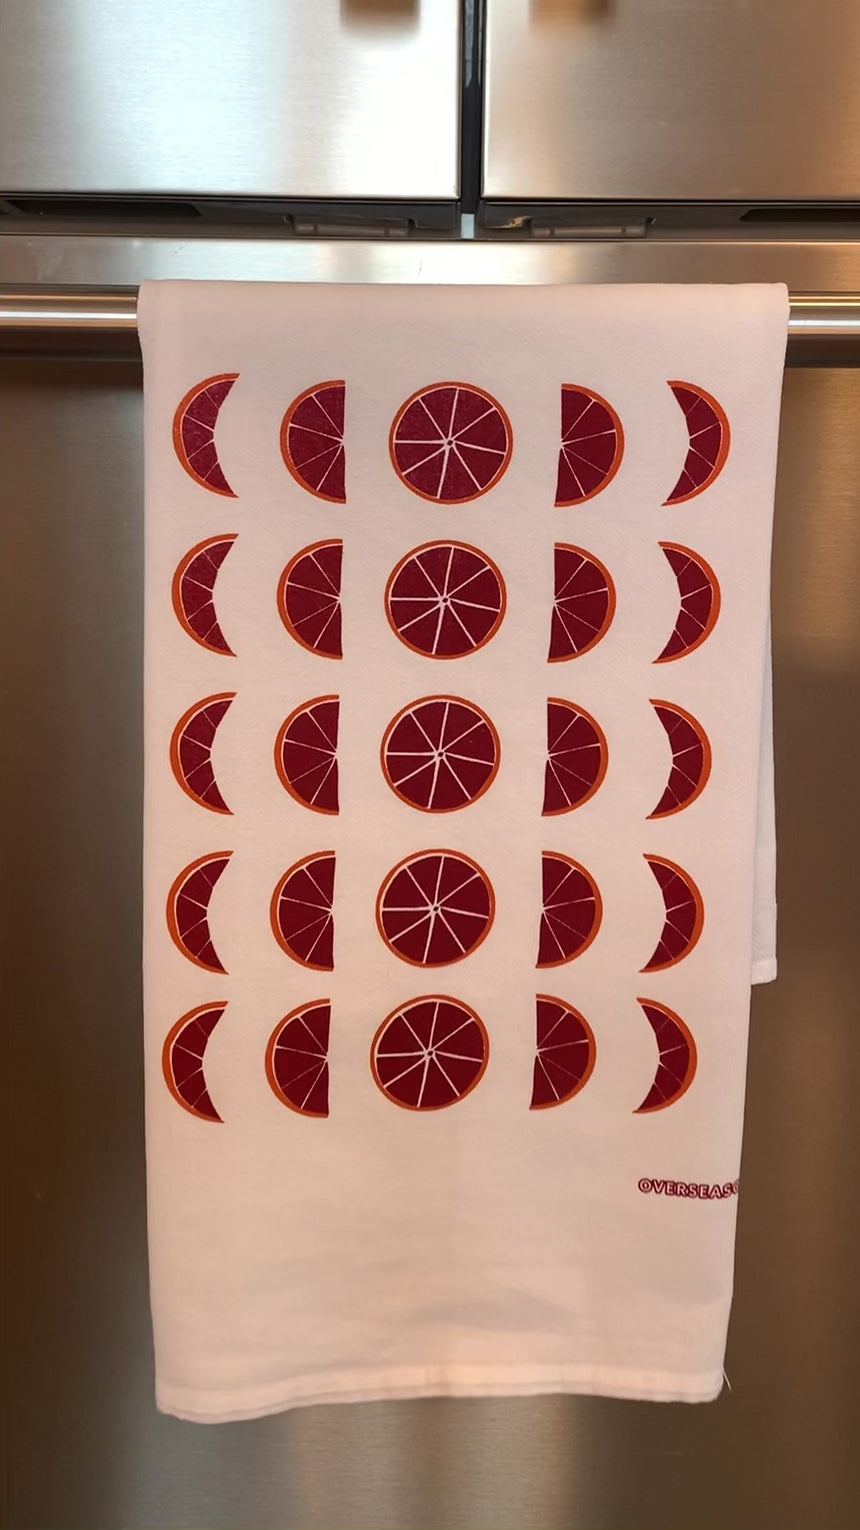 A white tea towel with blood orange moon designs hangs on a bar